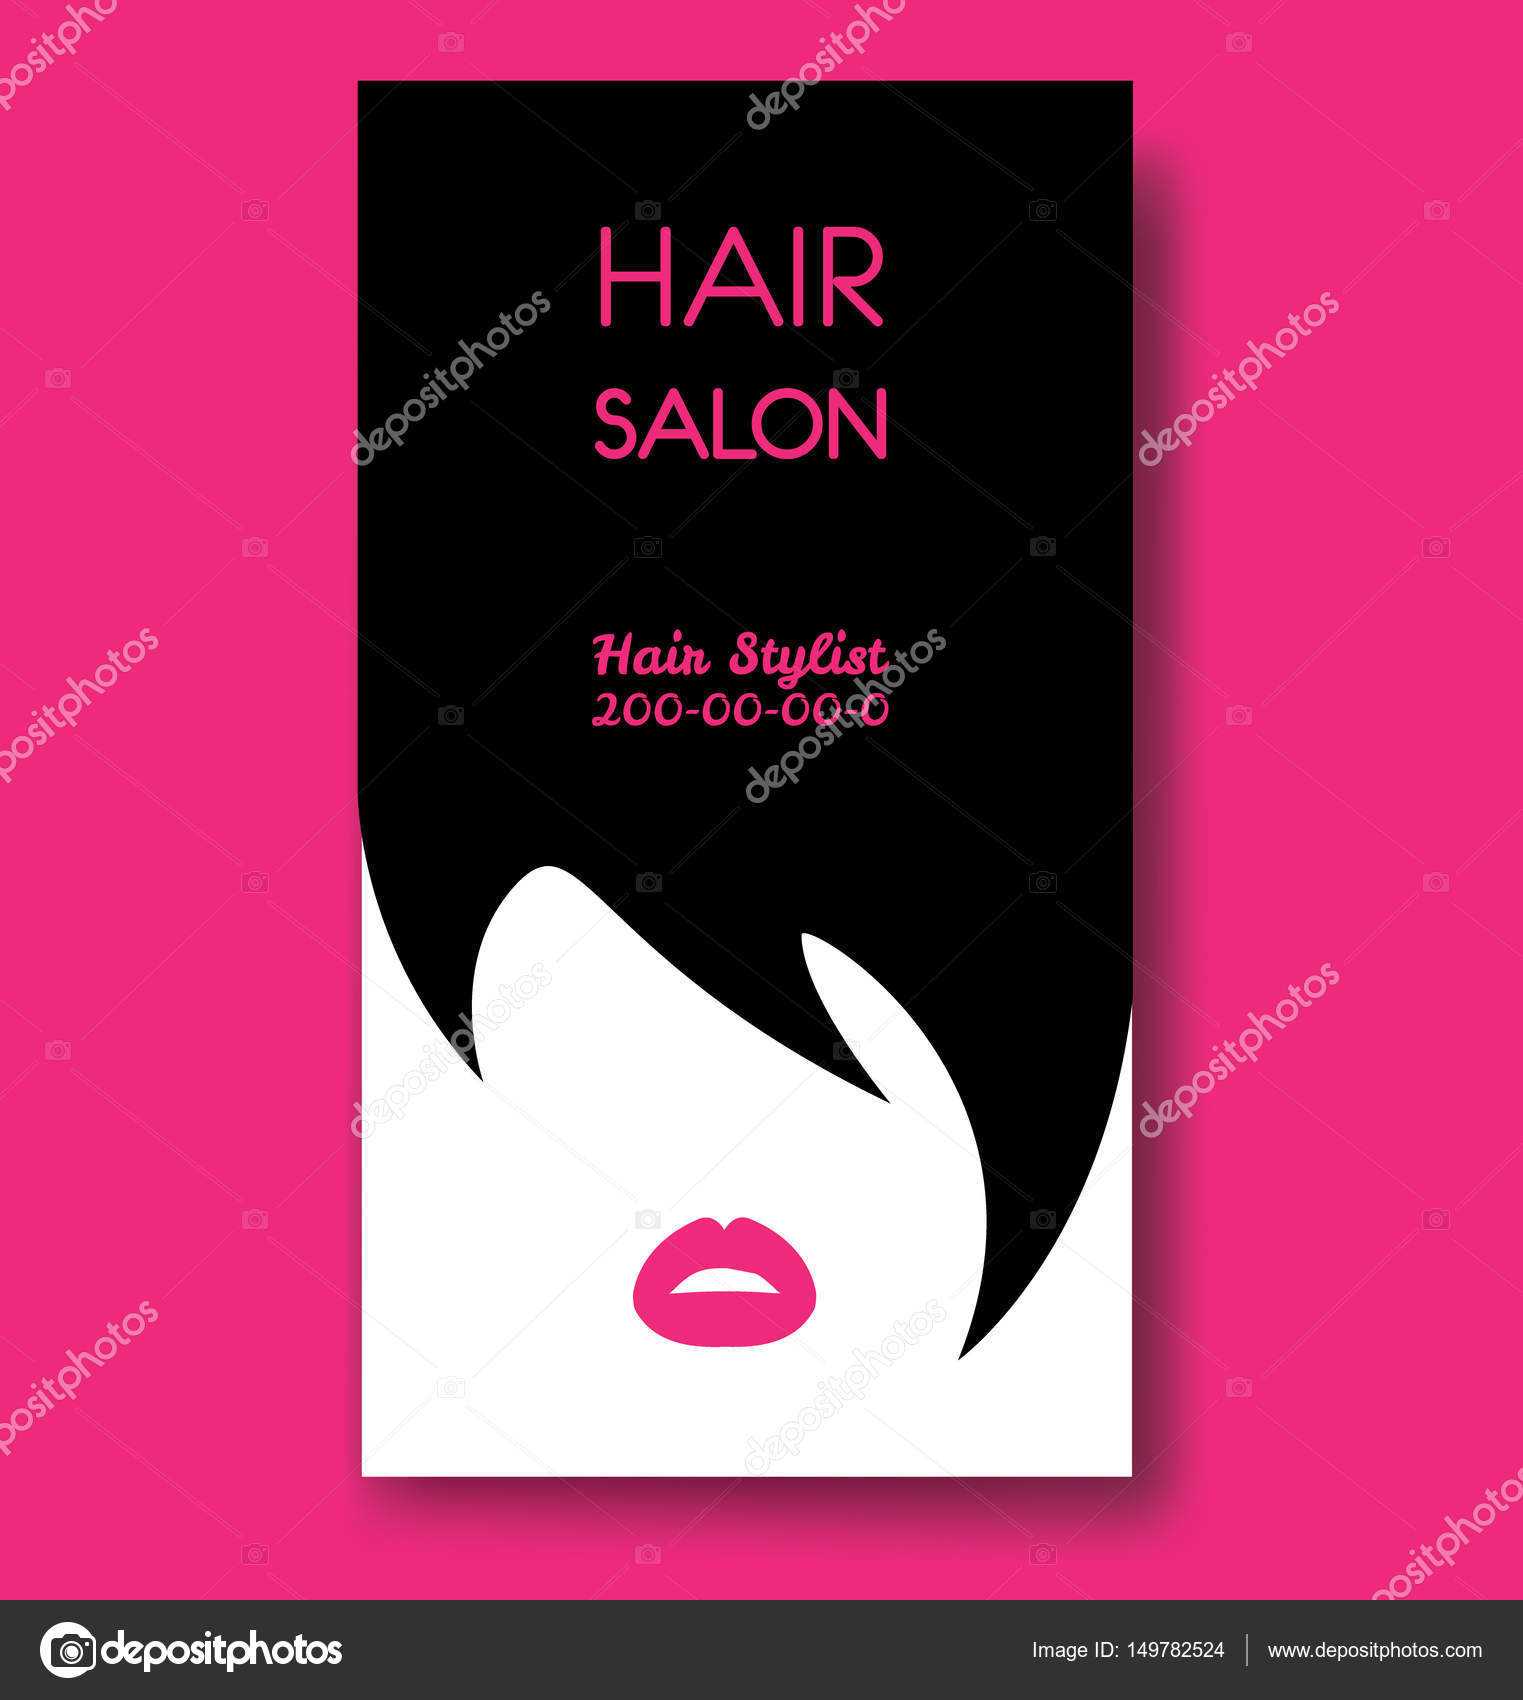 Hair Stylist Business Cards Examples | Hair Salon Business With Hair Salon Business Card Template